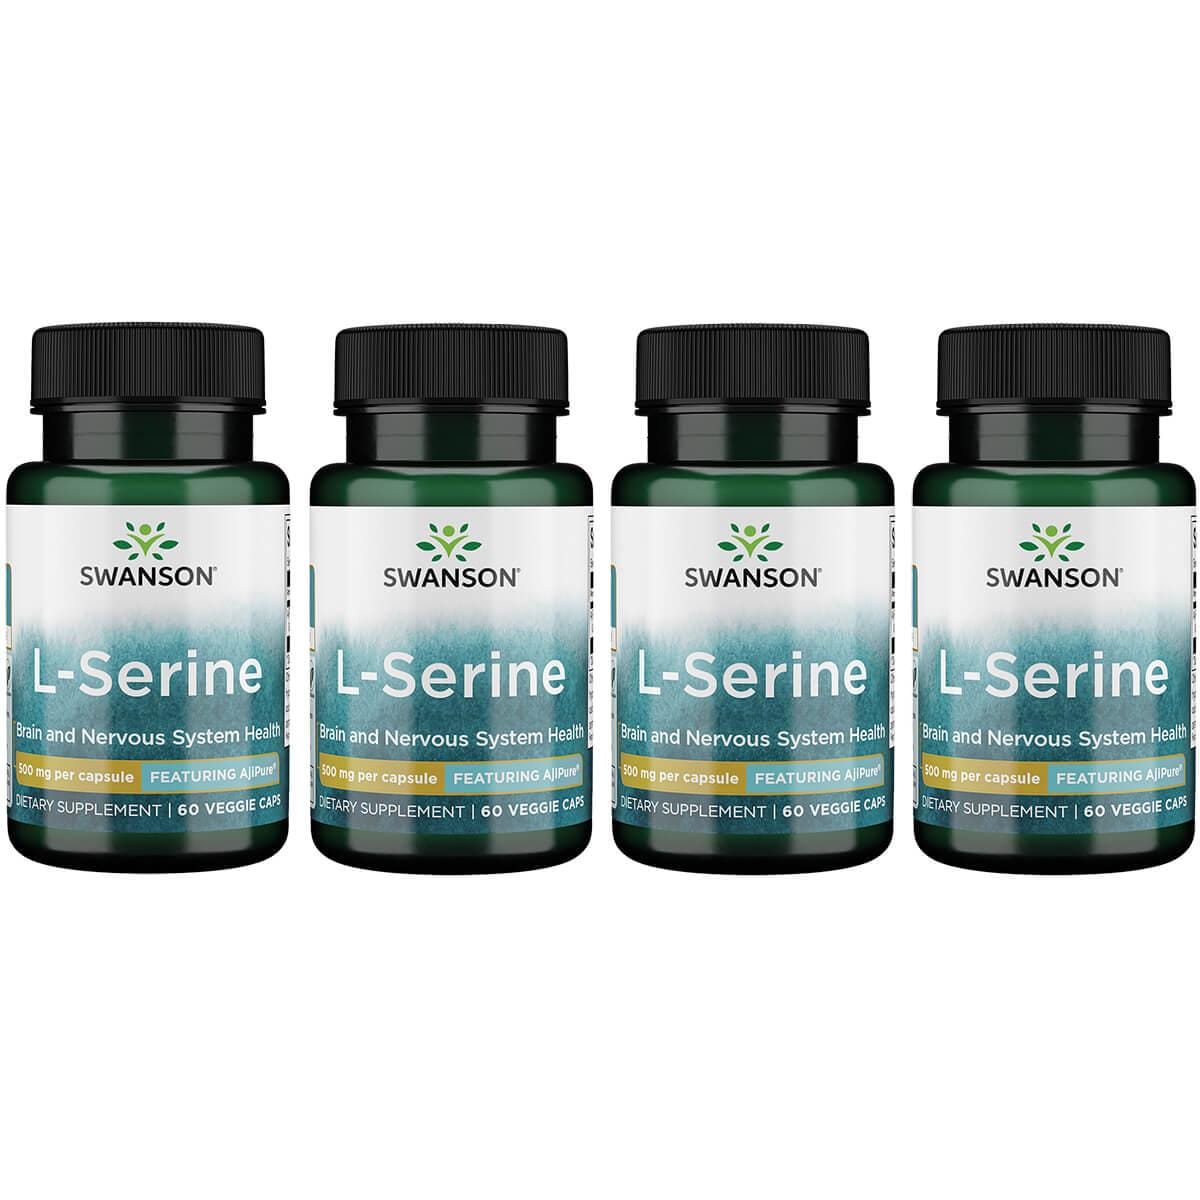 Swanson Ultra L-Serine - Featuring Ajipure 4 Pack Vitamin 500 mg 60 Veg Caps